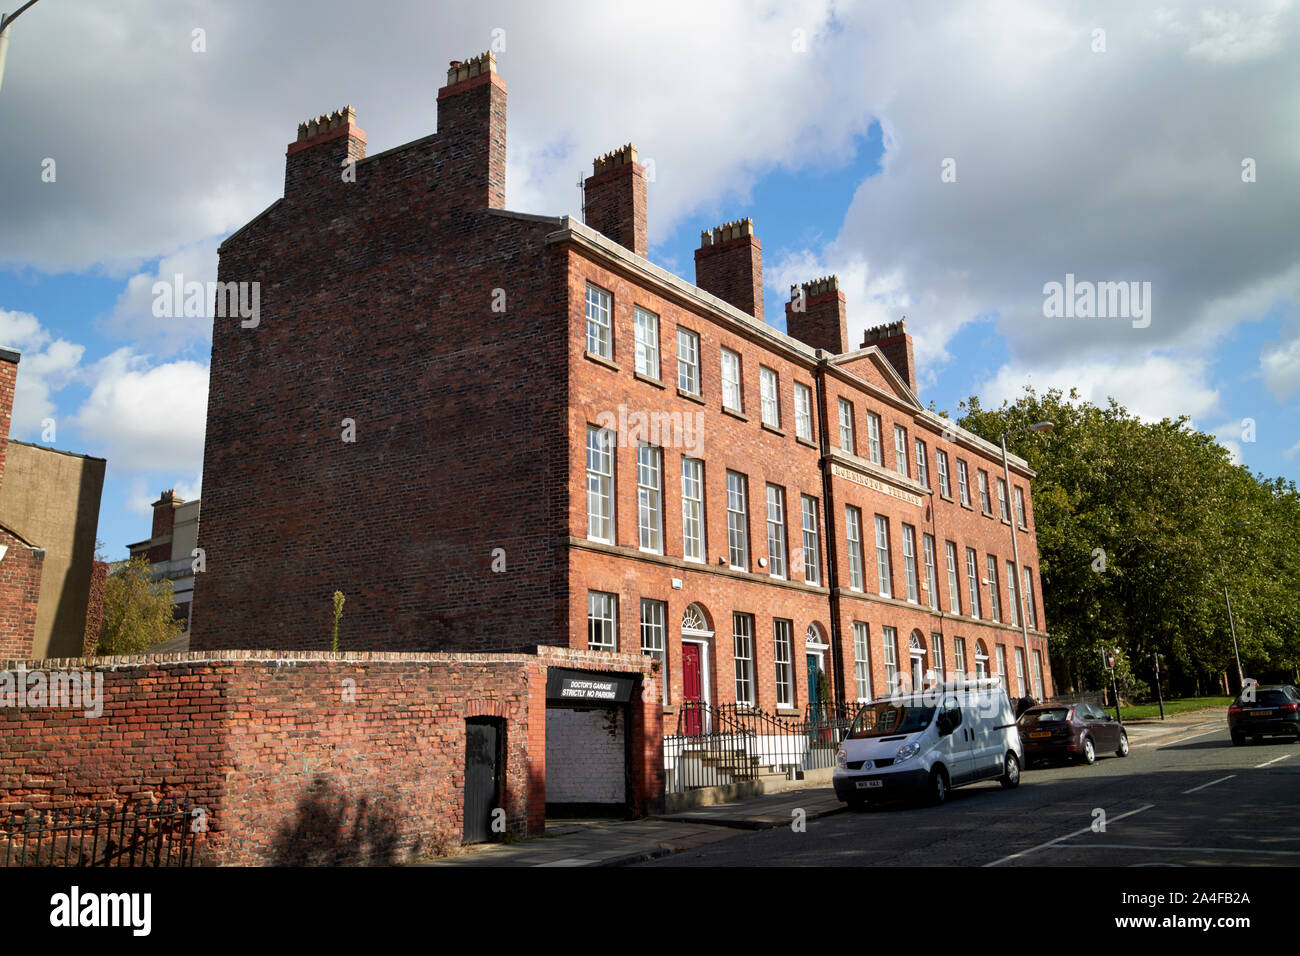 Mornington terrasse Gebäude obere Duke Street Liverpool England Großbritannien Stockfoto